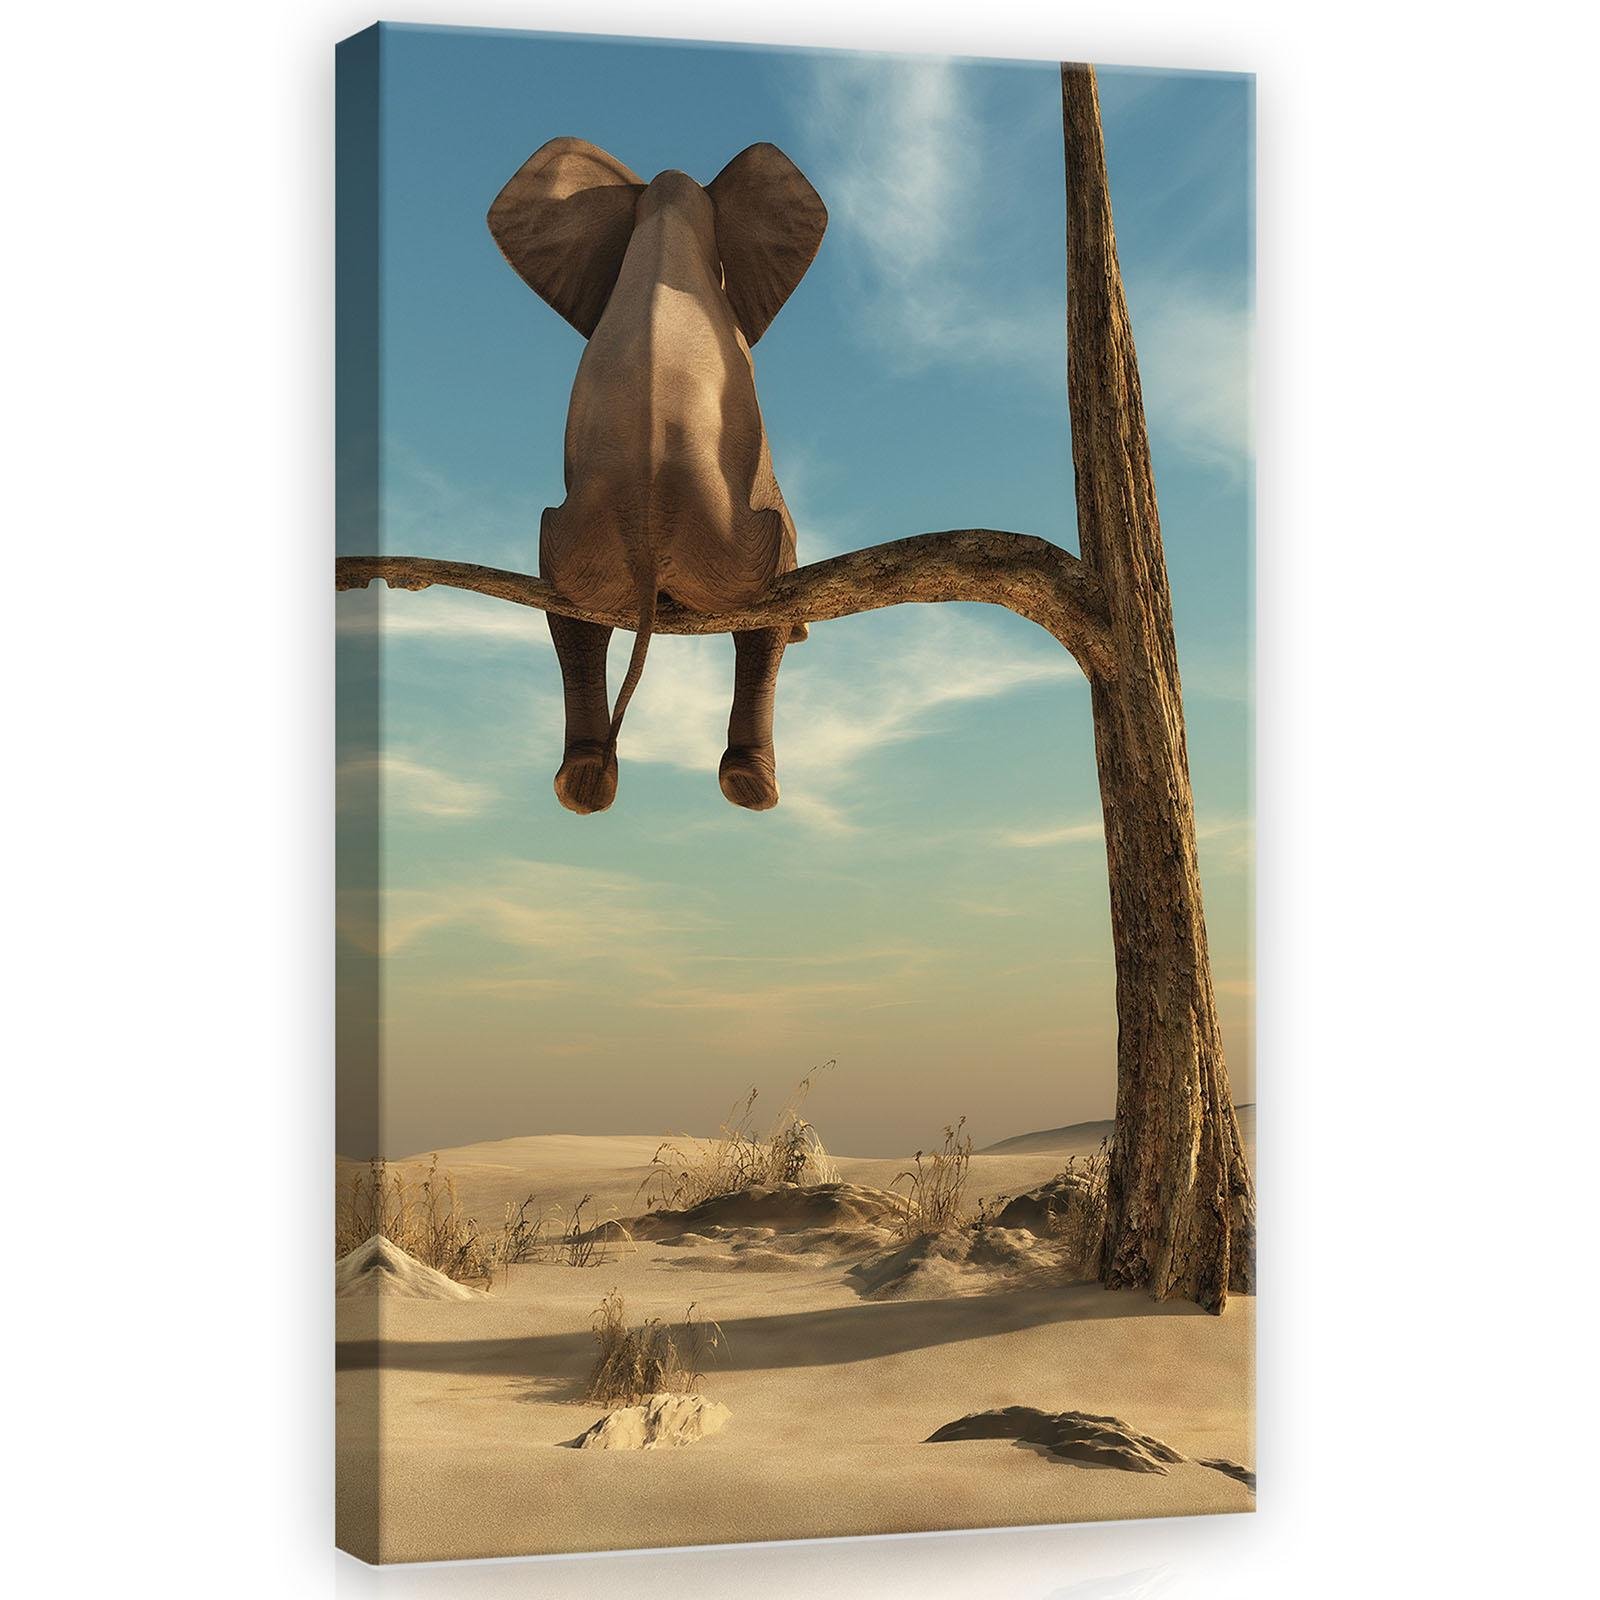 DekoShop Leinwandbild Canvas Wandbild Kunstdruck Elefant auf dem Baum AMDPP11898O4 O4 (60cm. x 40cm.)